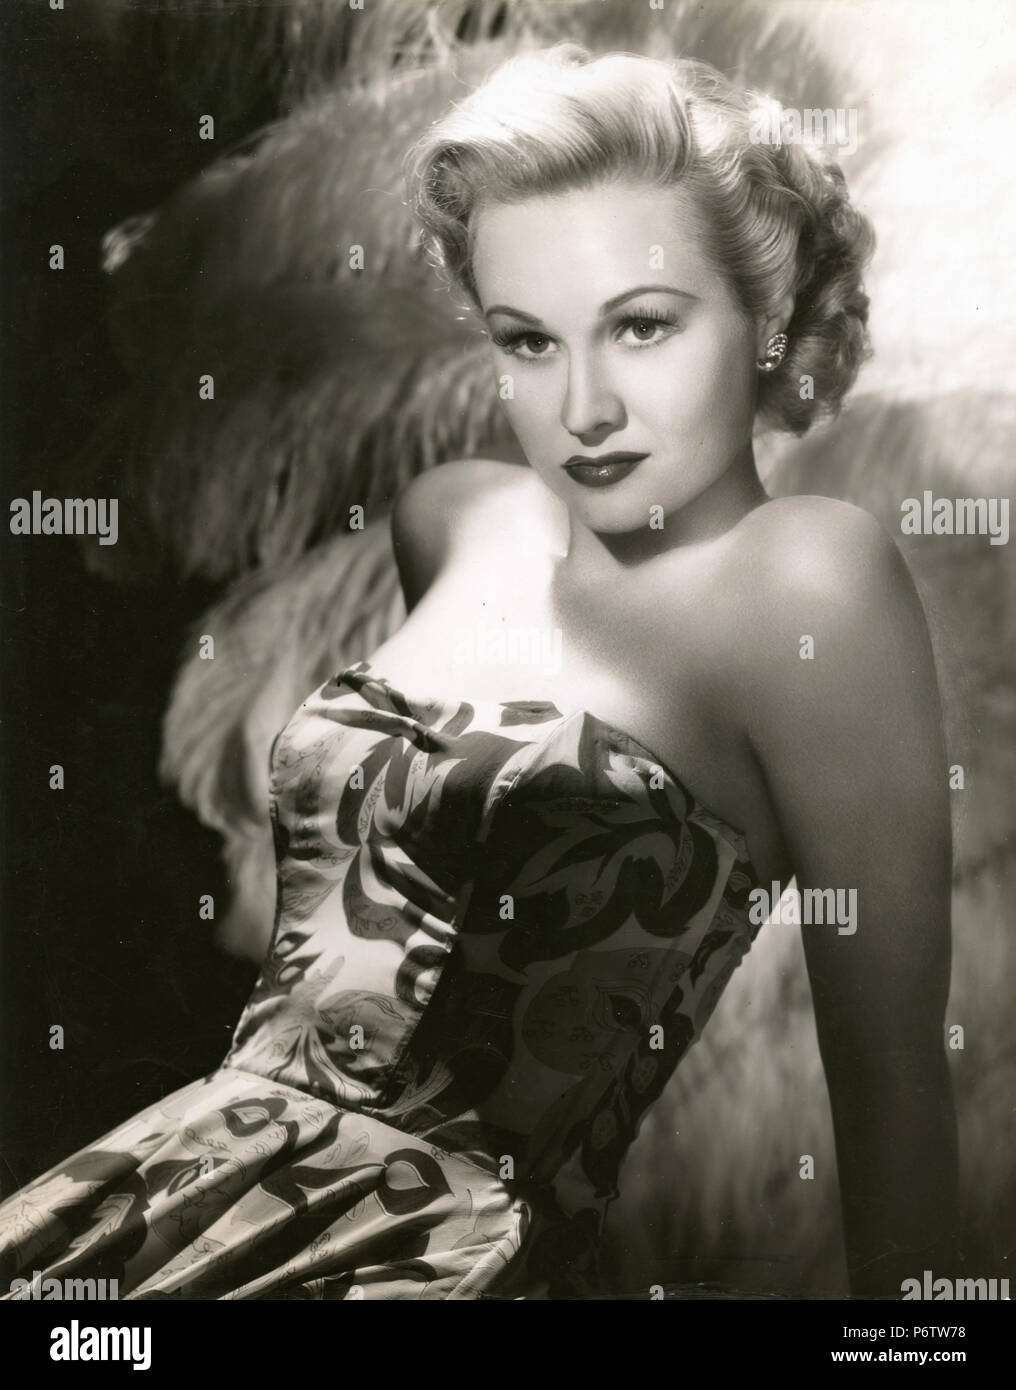 Actrice americano Virginia Mayo, 1940s Foto Stock